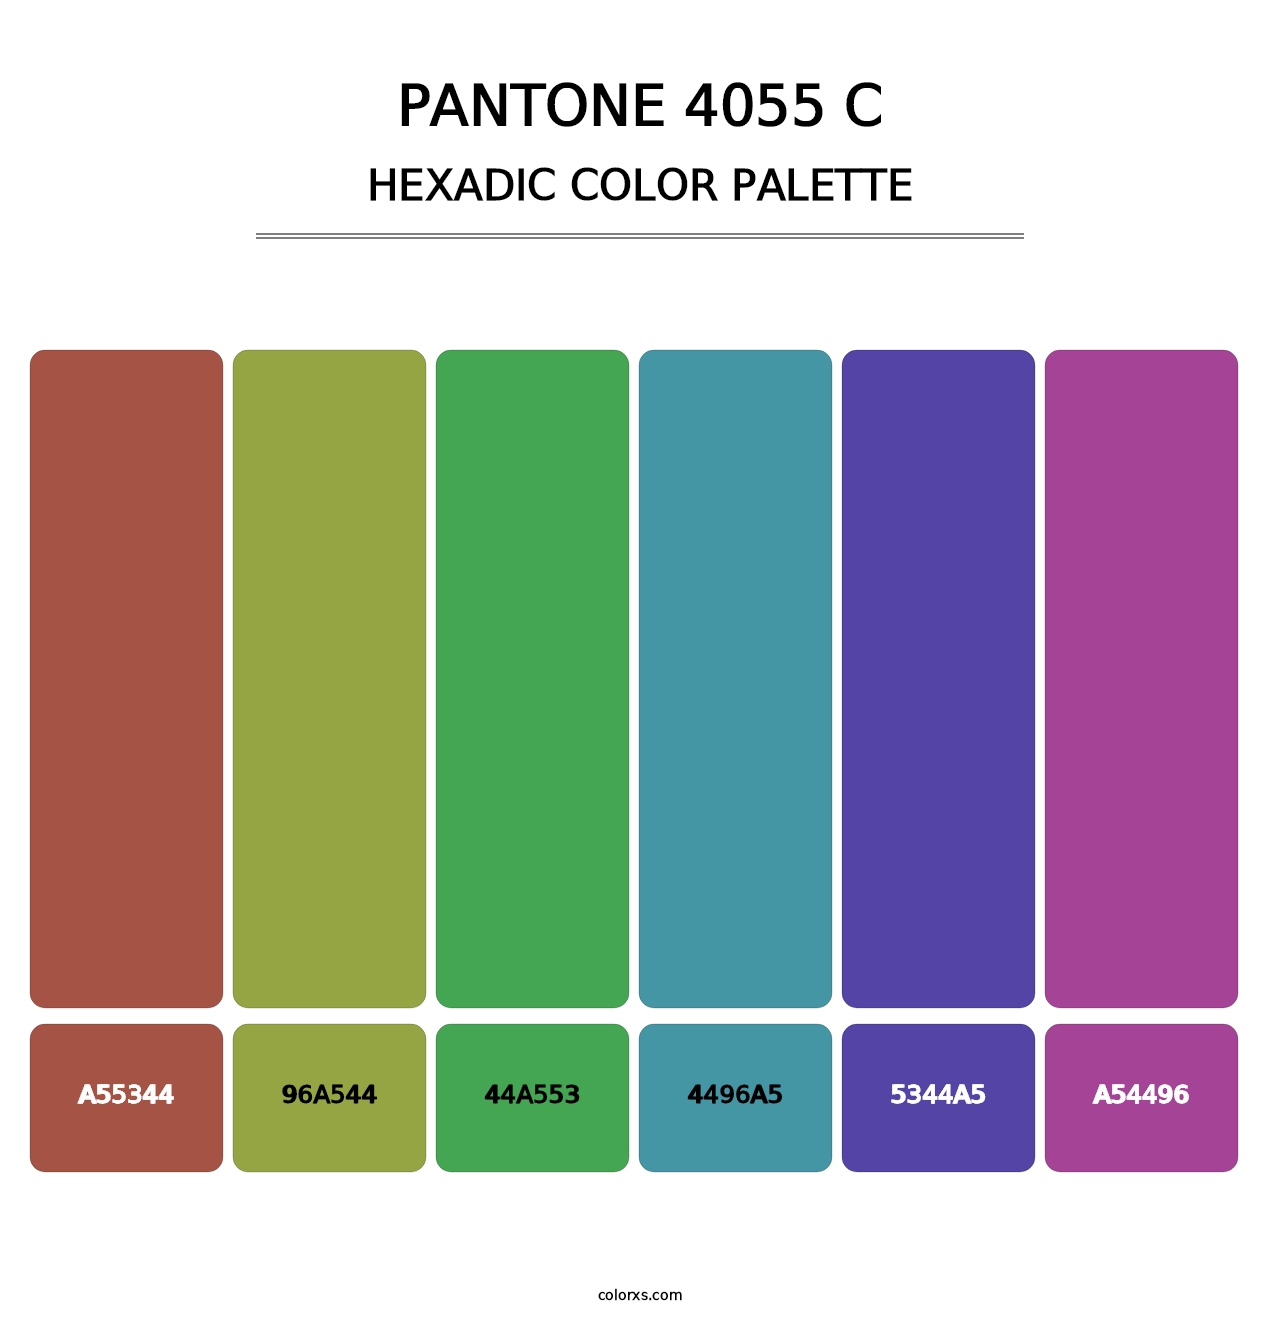 PANTONE 4055 C - Hexadic Color Palette